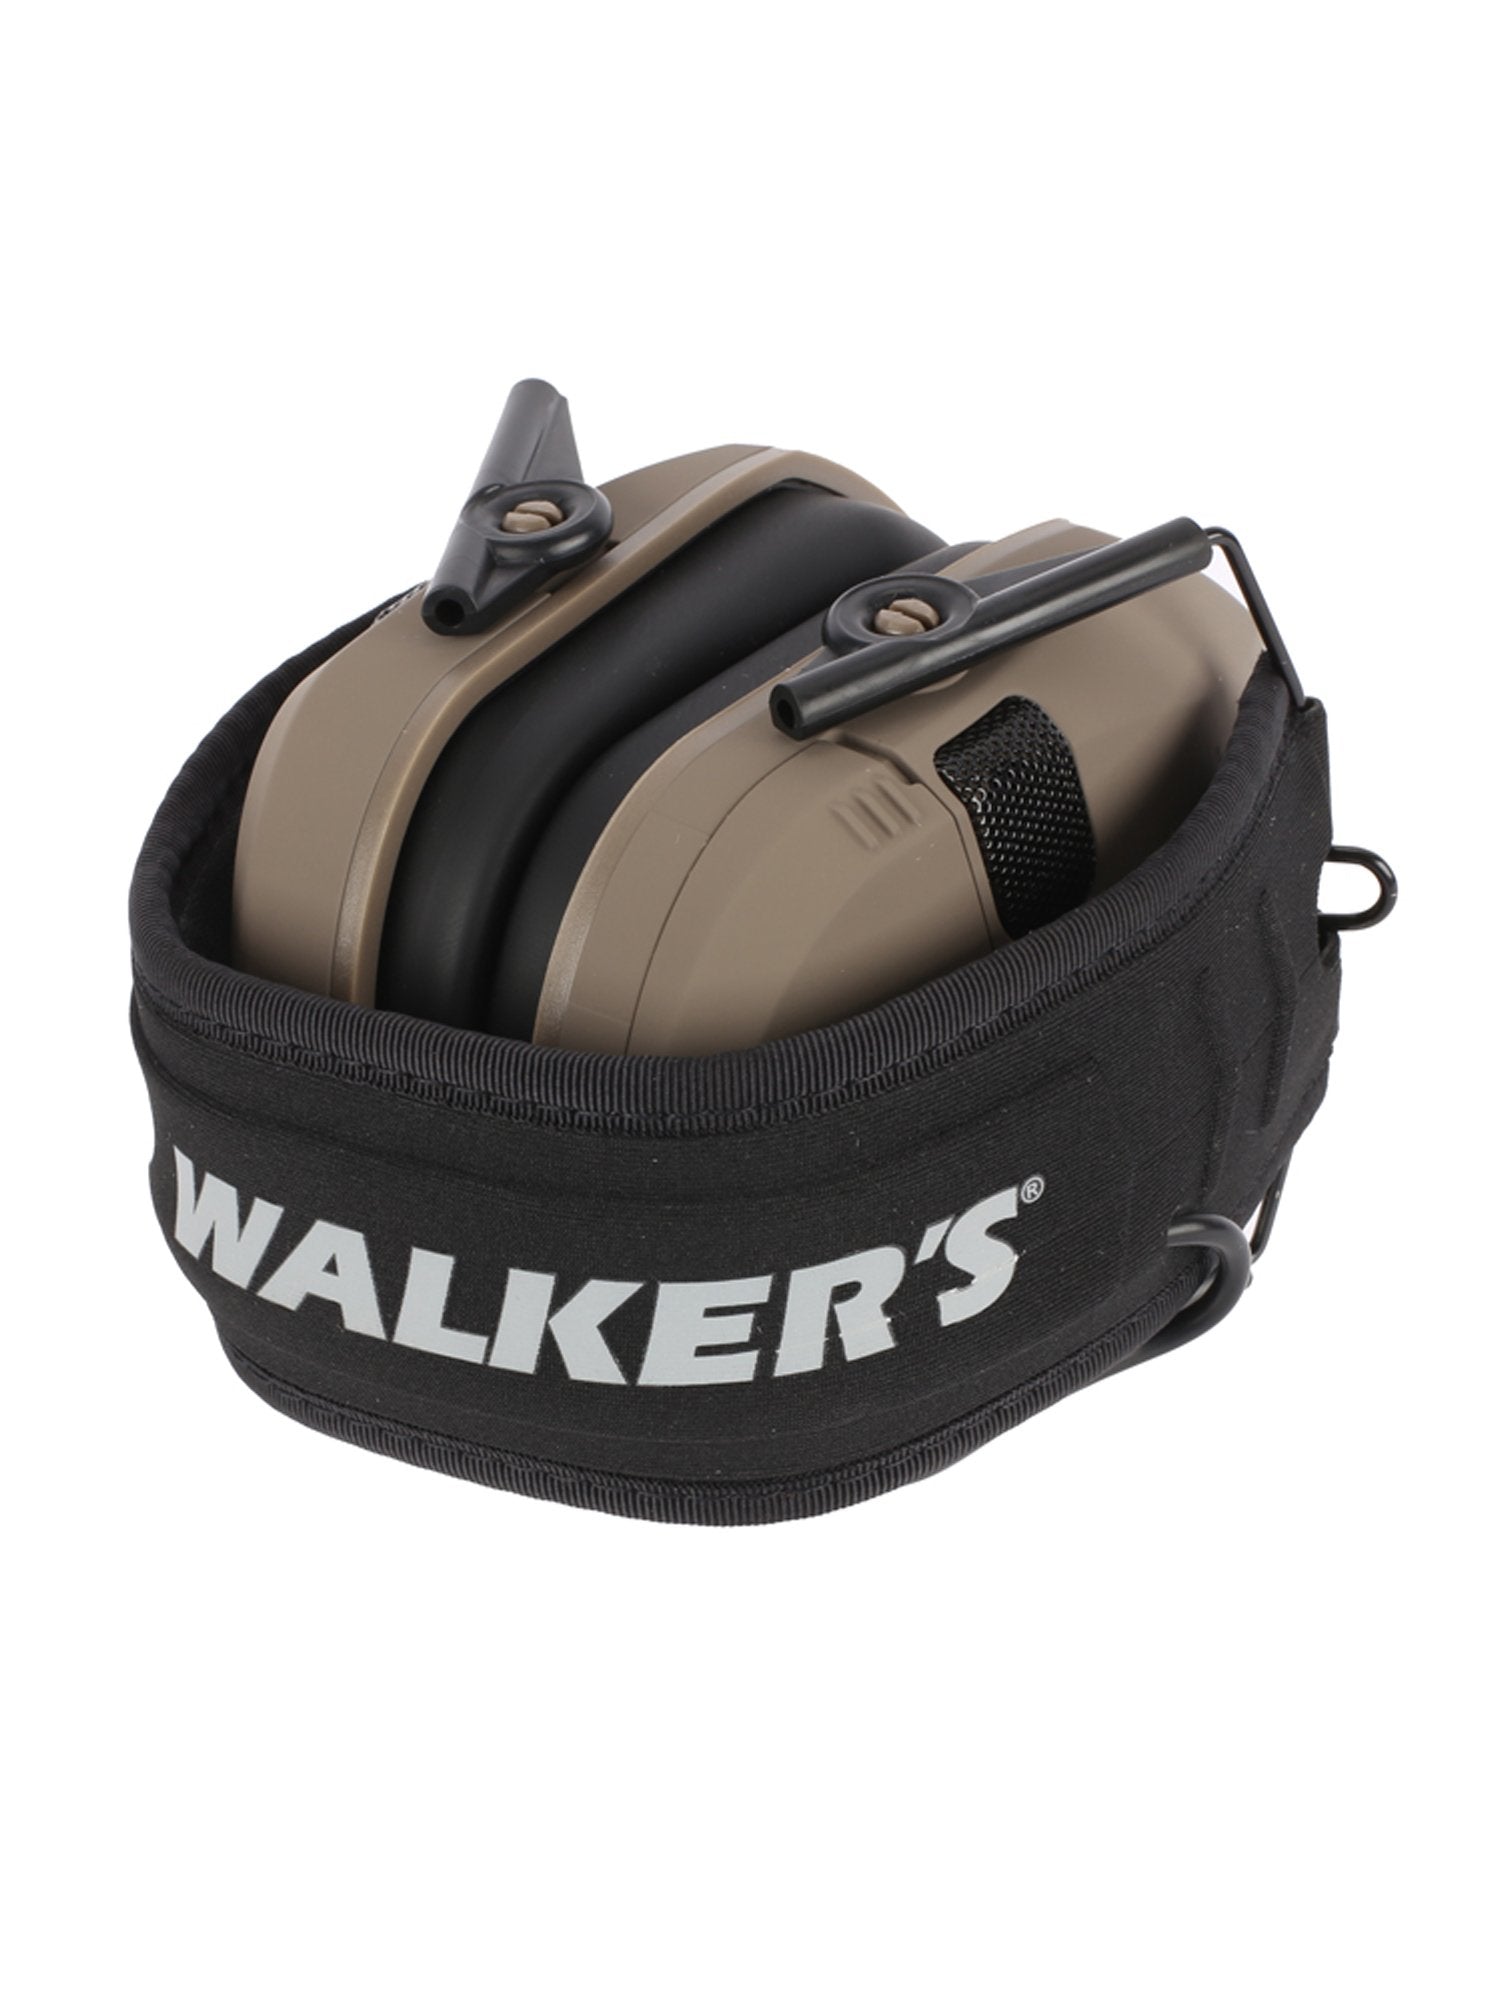 Walkers GSM Razor Slim Folding Earmuffs - Flat Dark Earth - TacSource